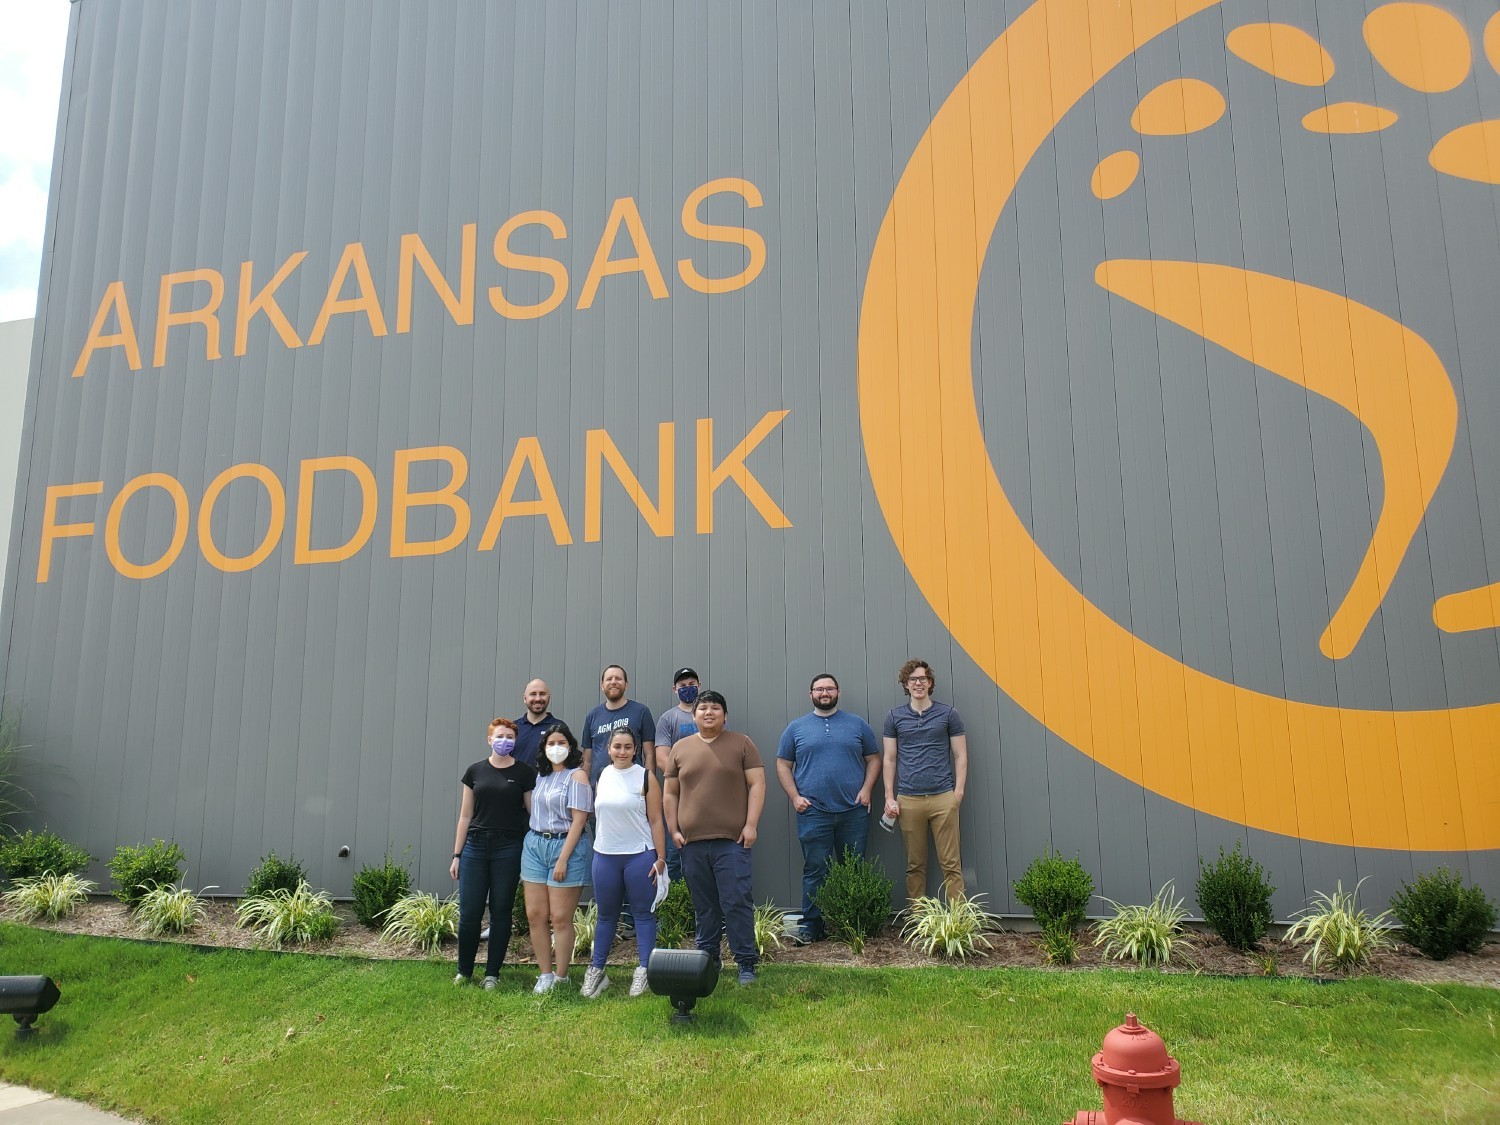 Volunteering with the Arkansas Food Bank